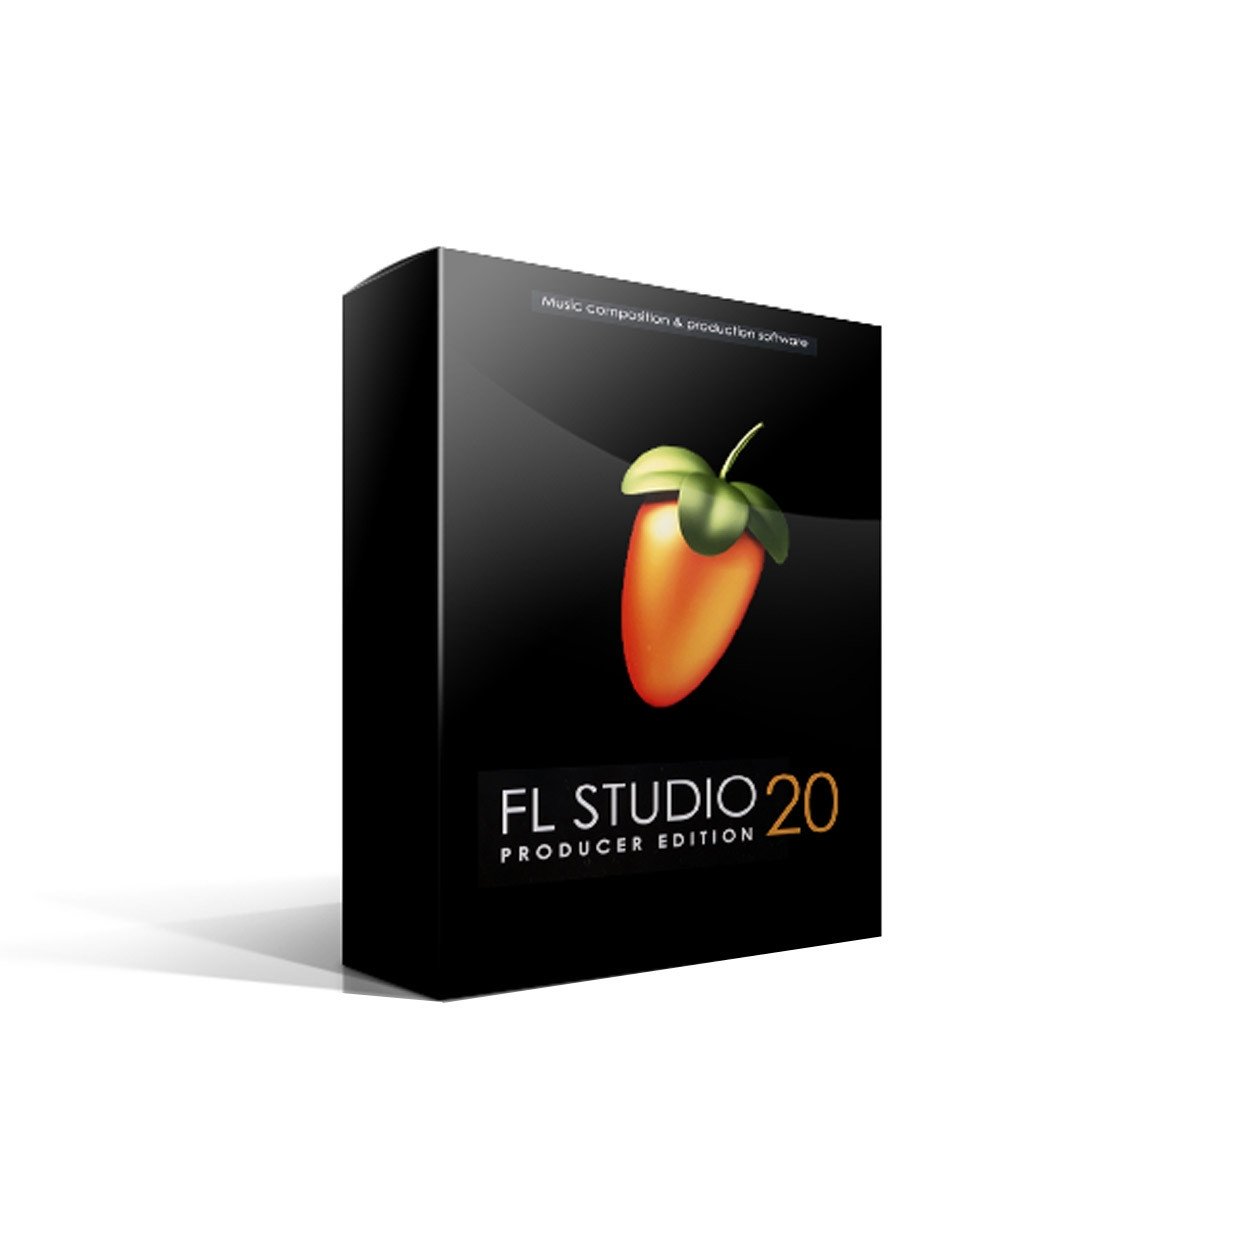 Fl studio 20 full free download mac slack app for macos